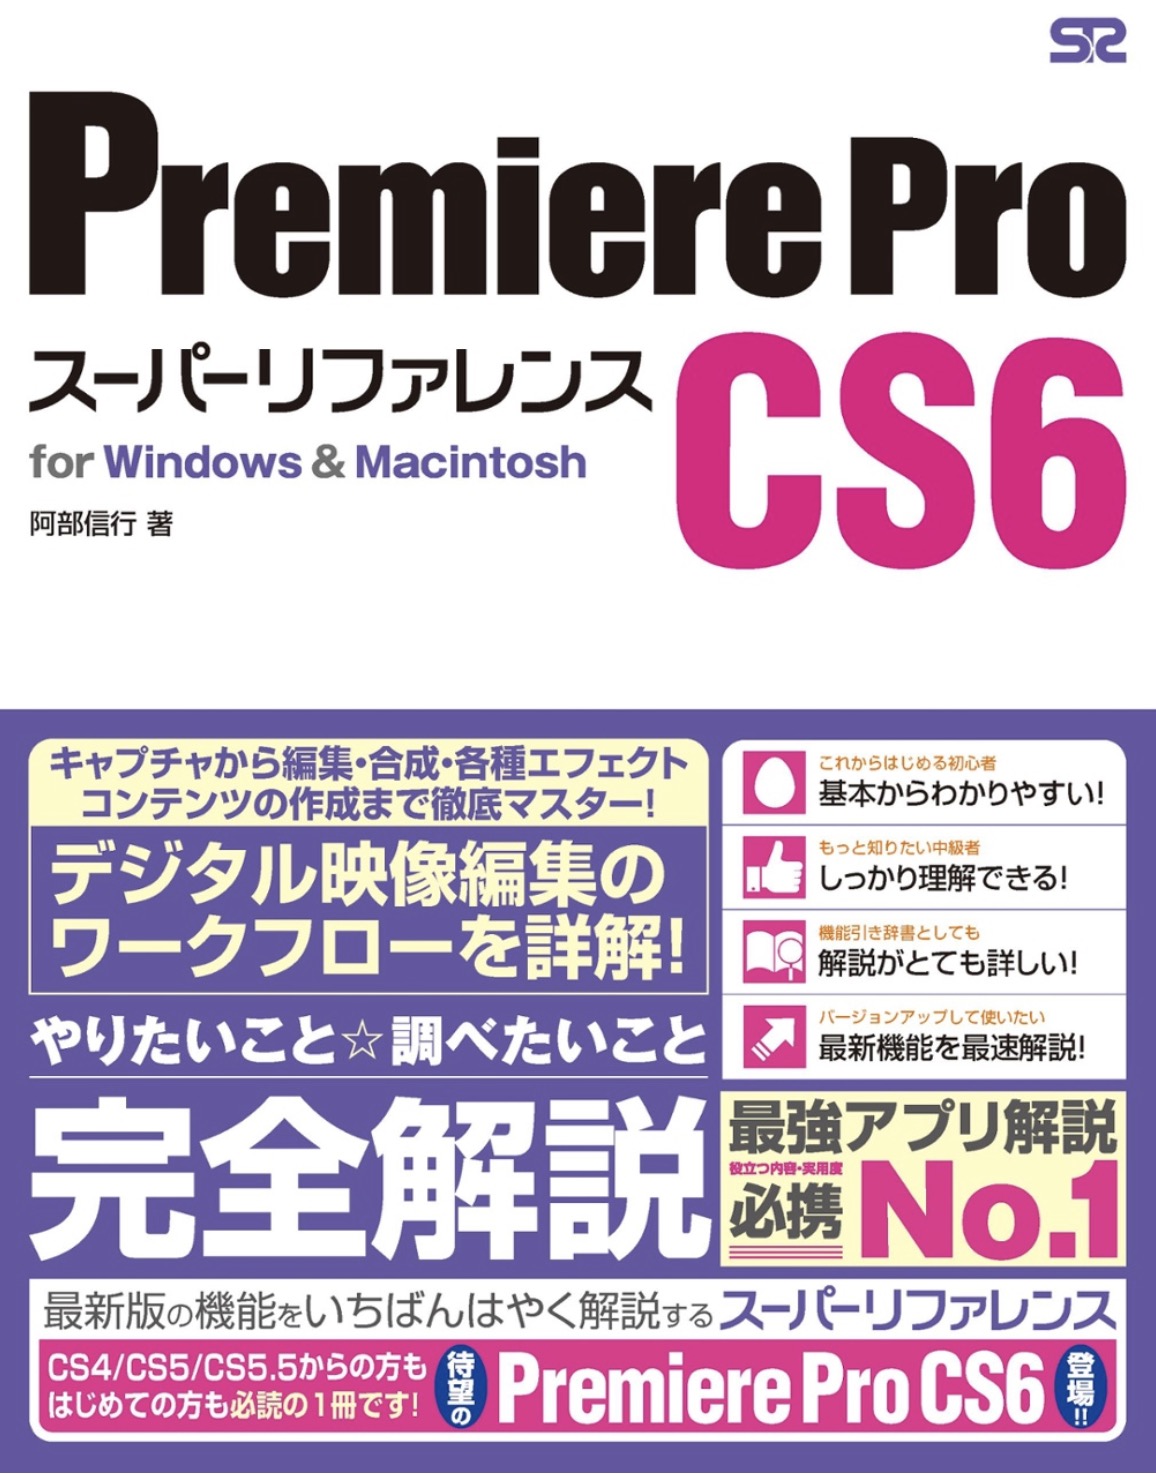 Premiere Pro CS6 スーパーリファレンス for Windows&Macintosh 